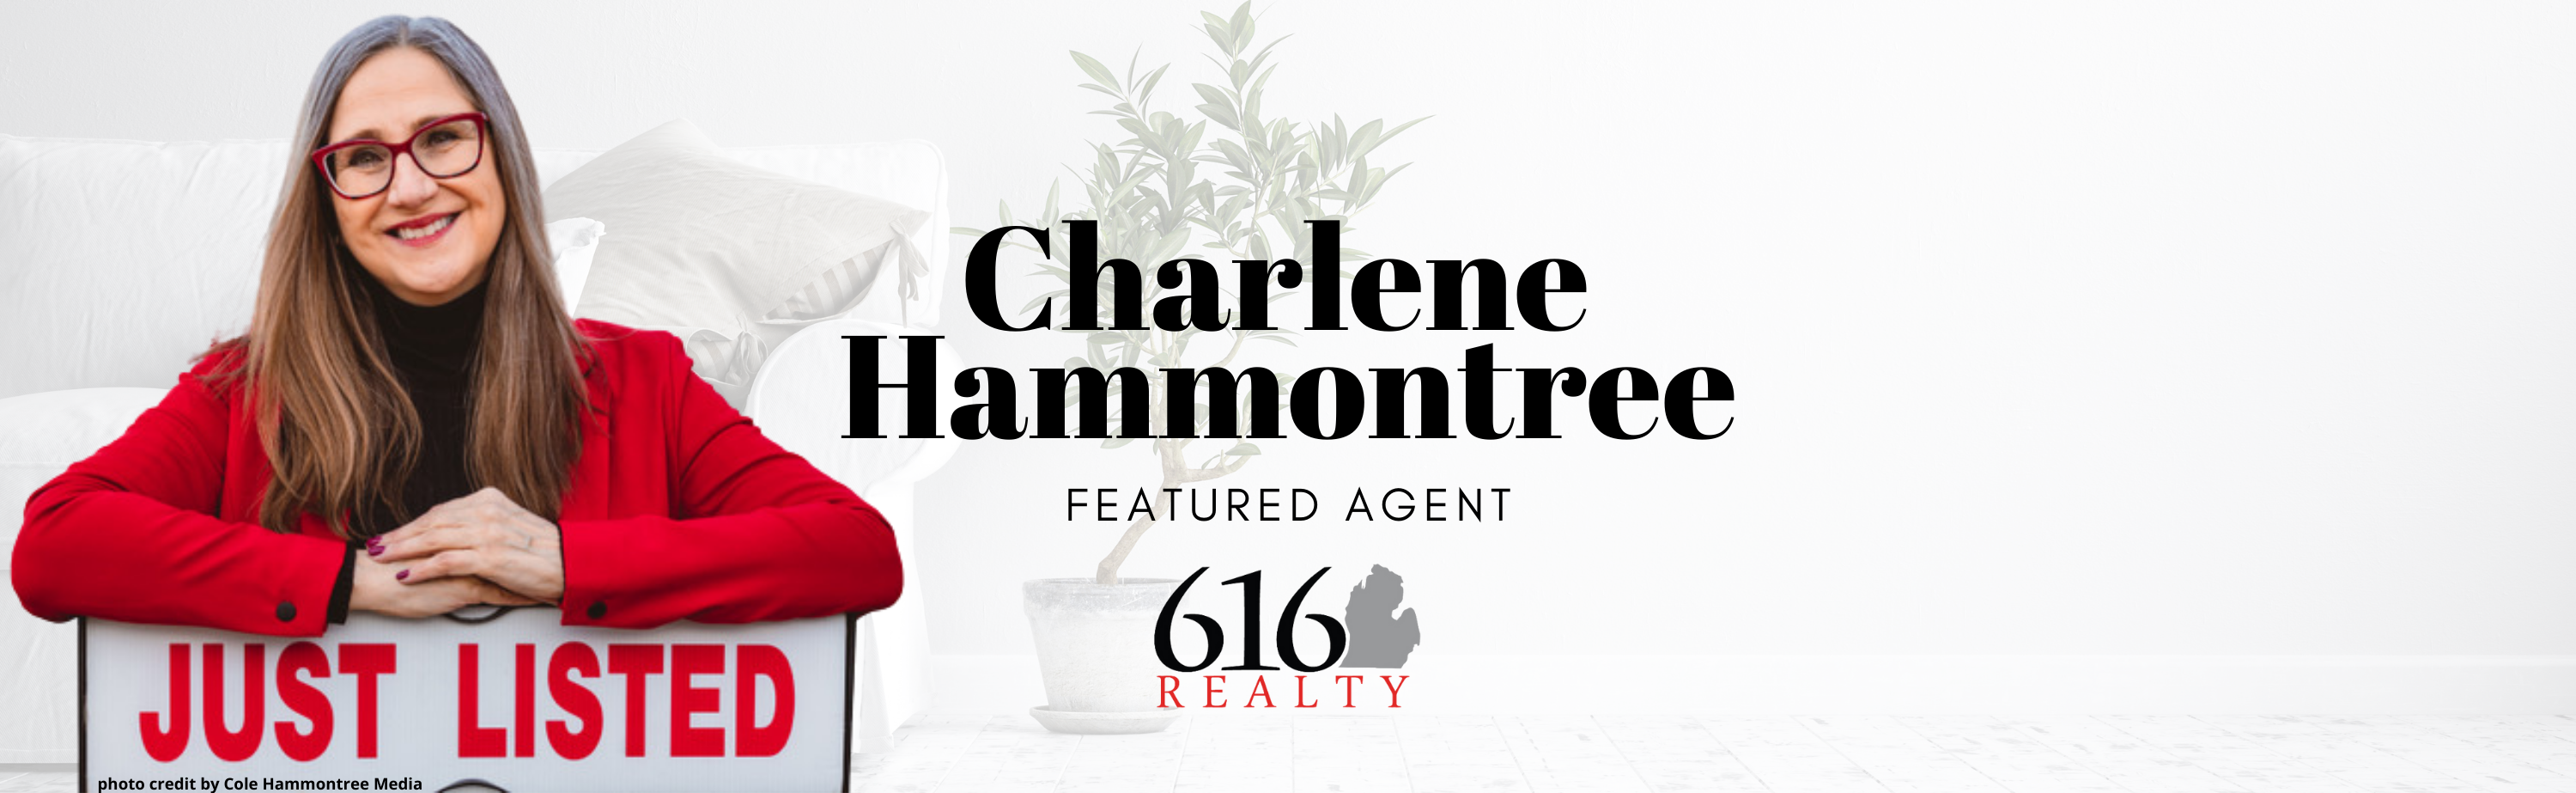 Featured Agent Banner - Charlene Hammontree